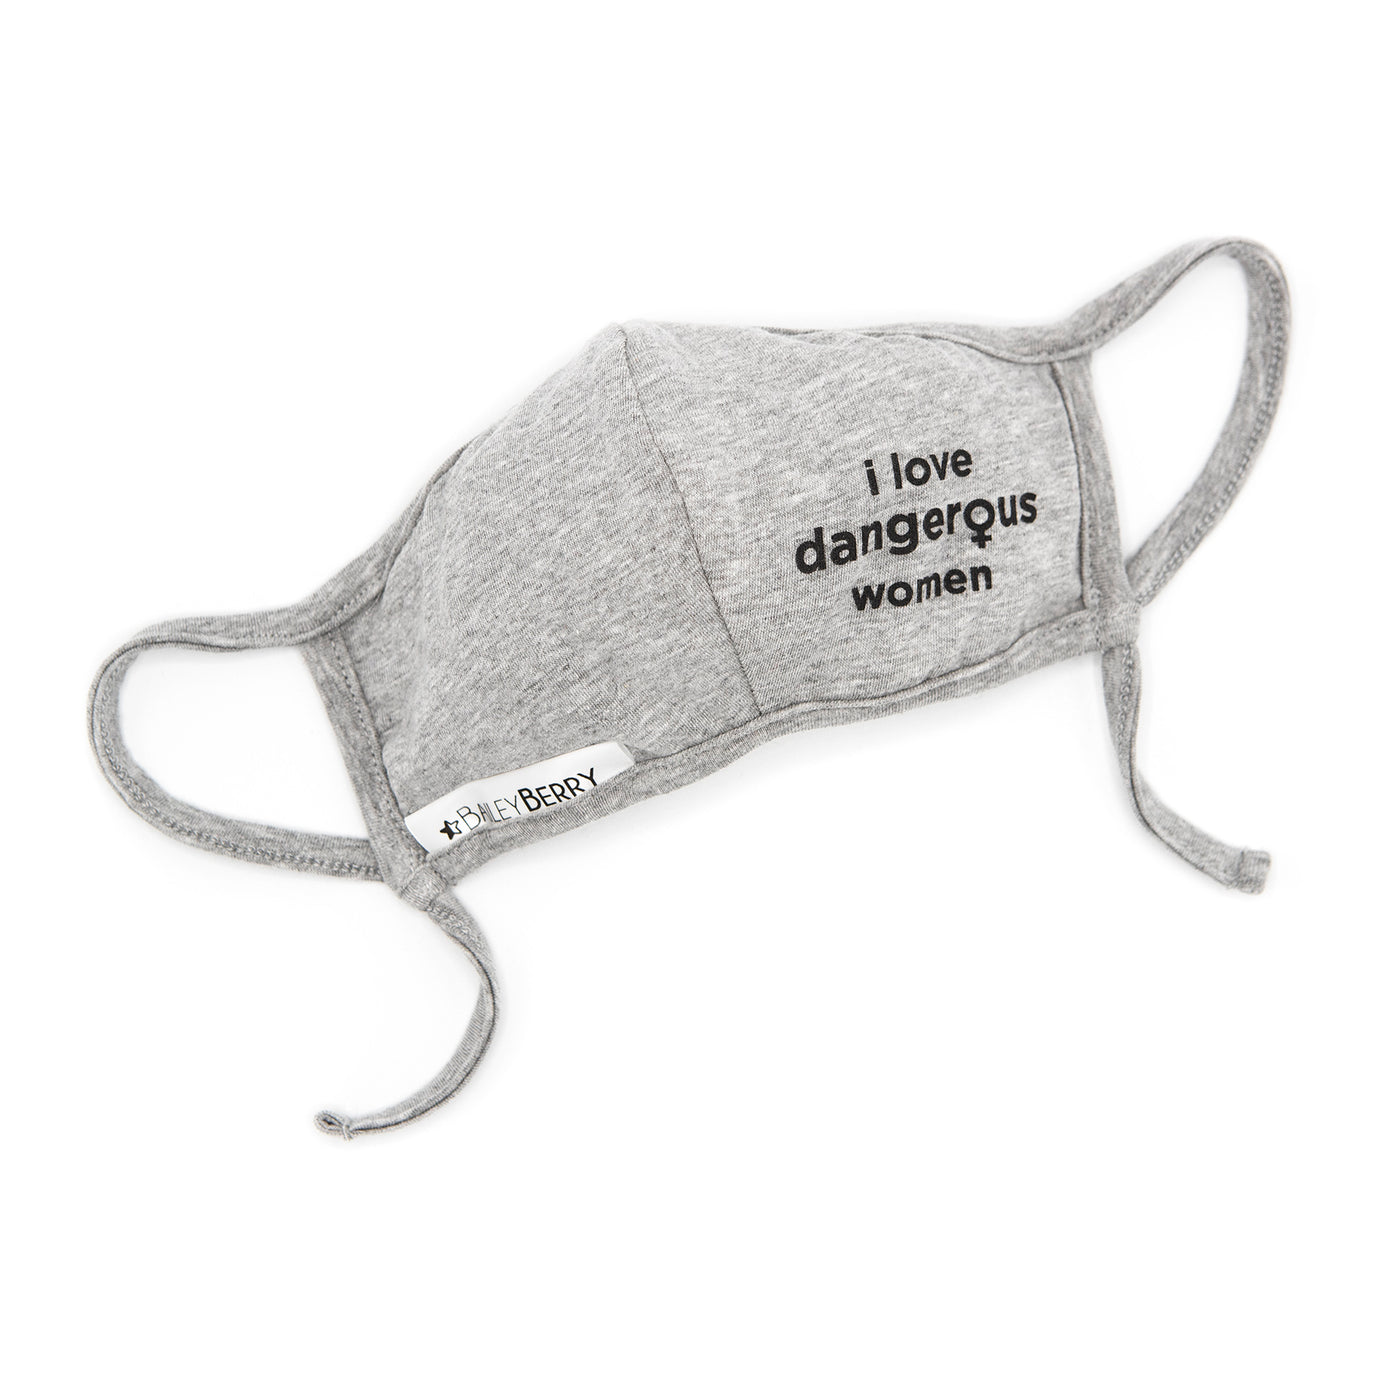 "I Love Dangerous Women" Adult Face Mask with Adjustable Straps and Filter Pocket (2-Pack)